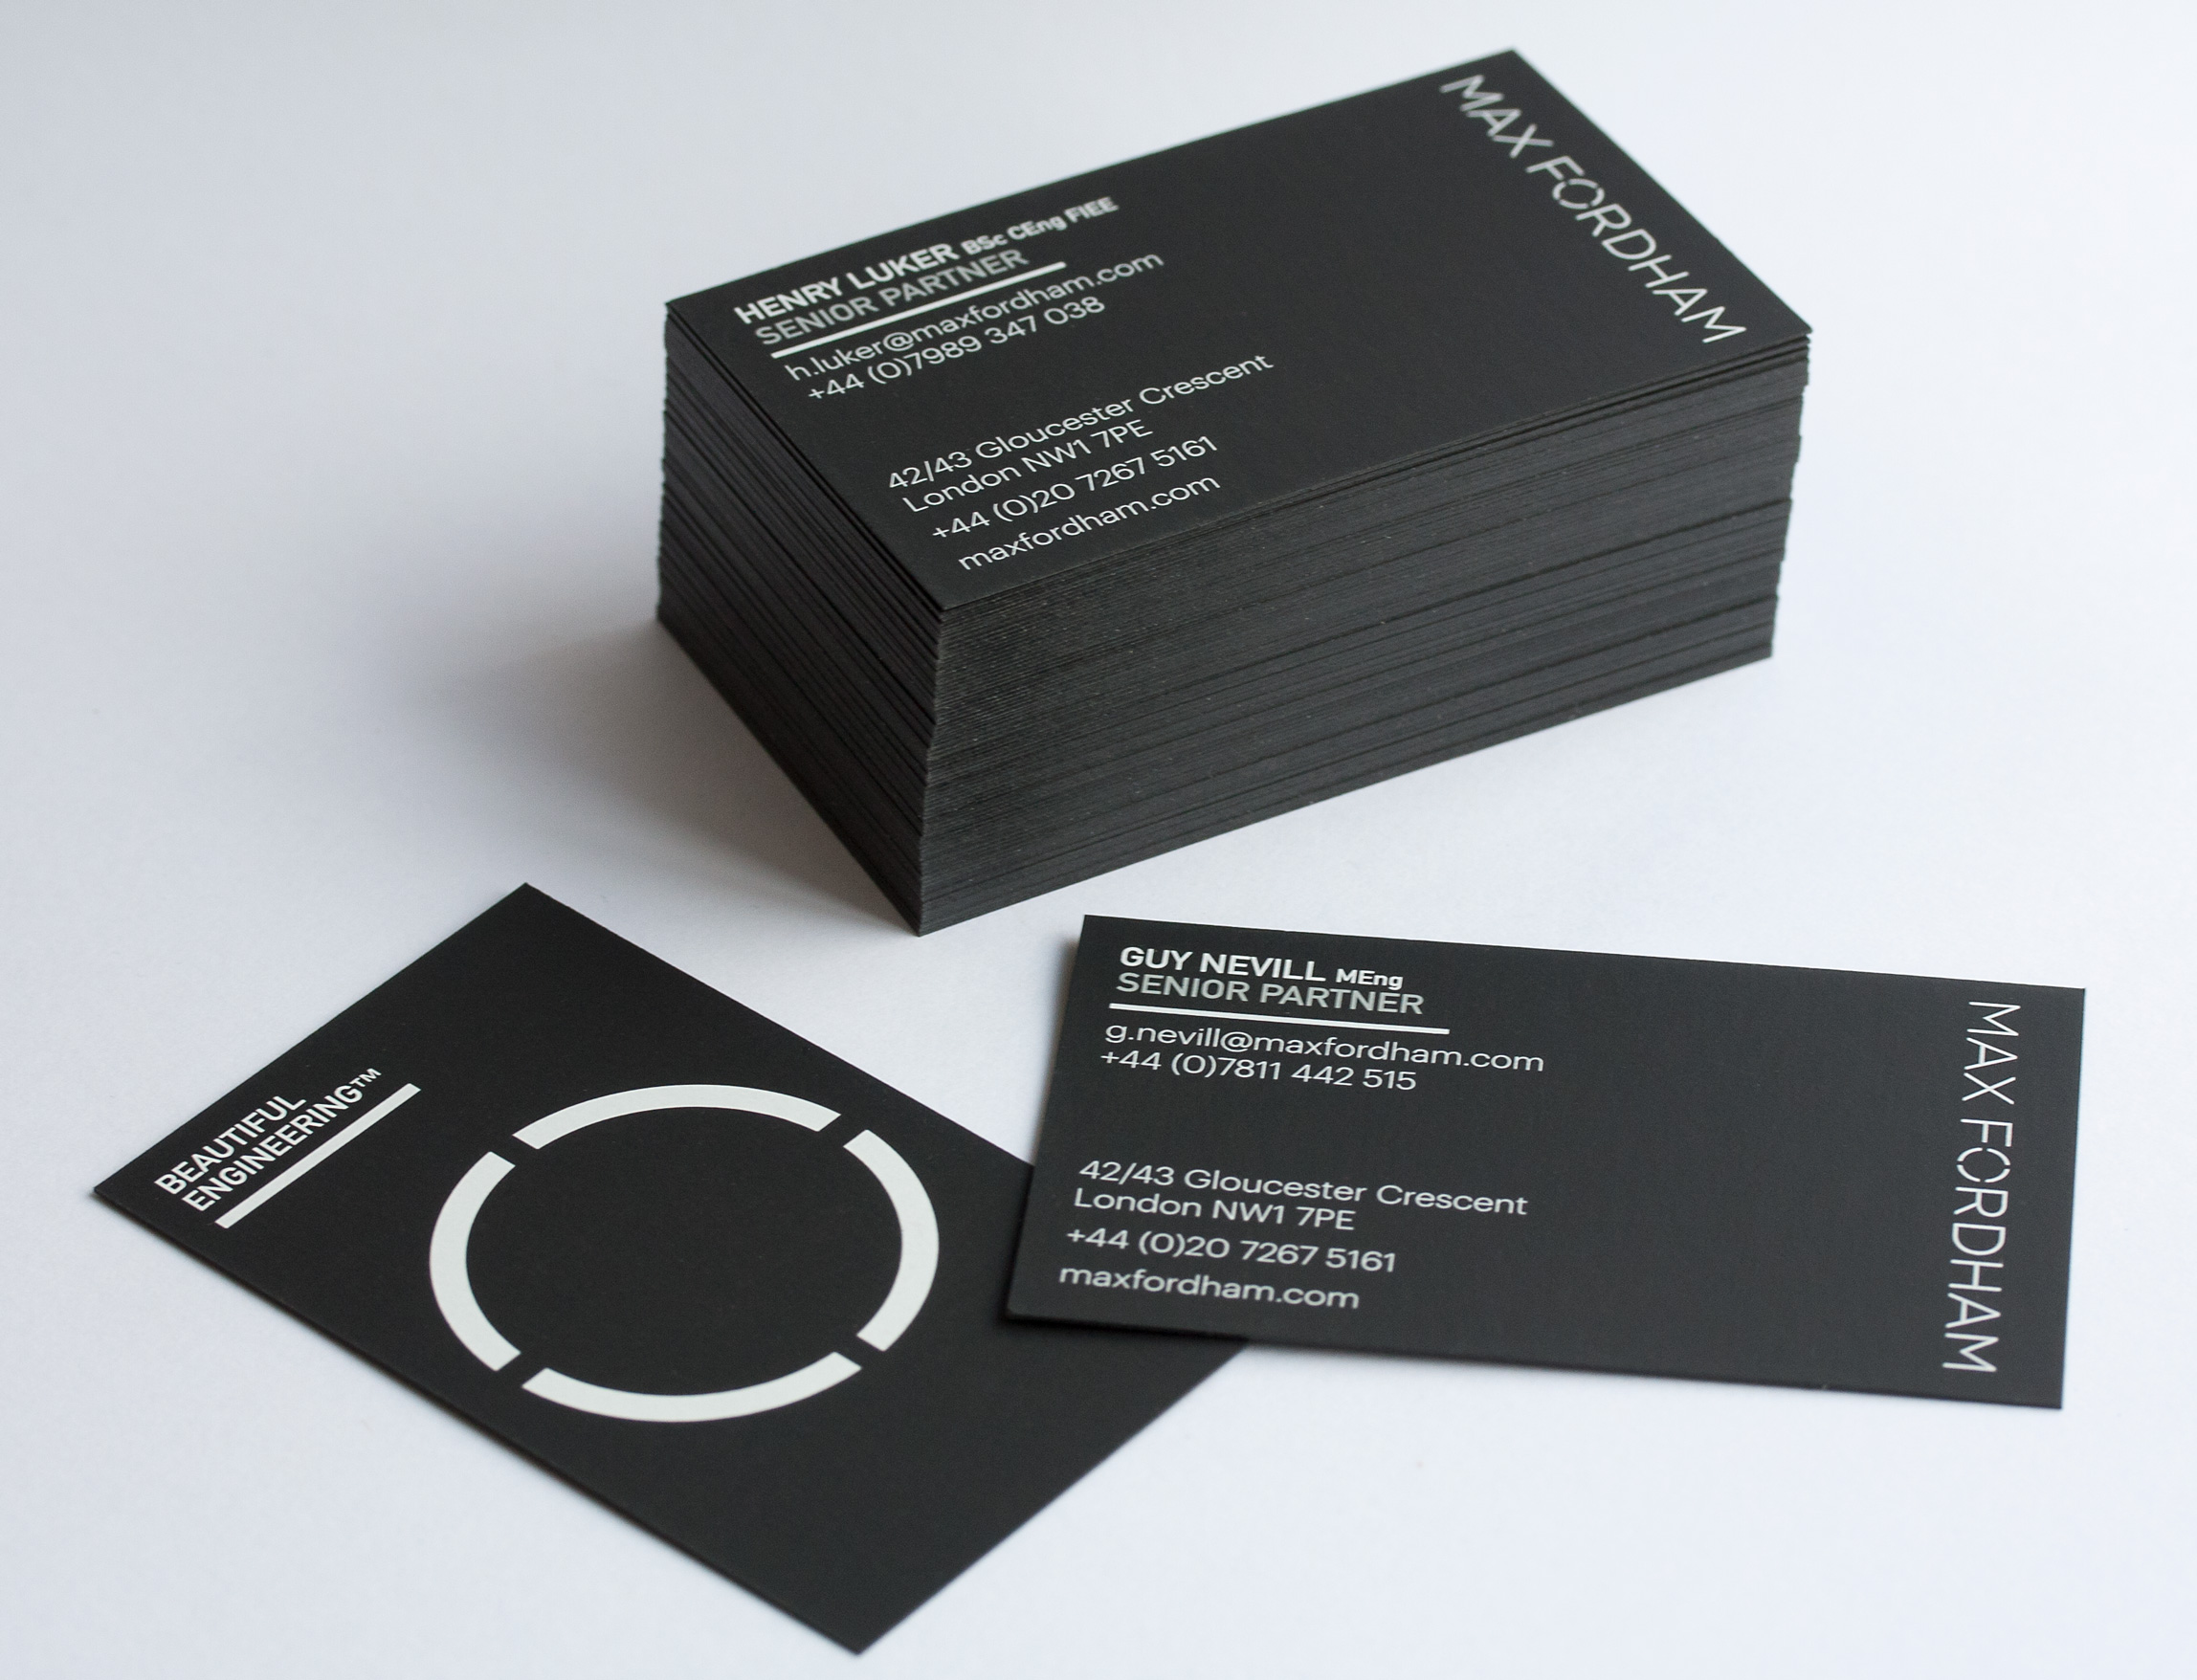 Max Fordham rebrand beautiful engineering marketing business cards